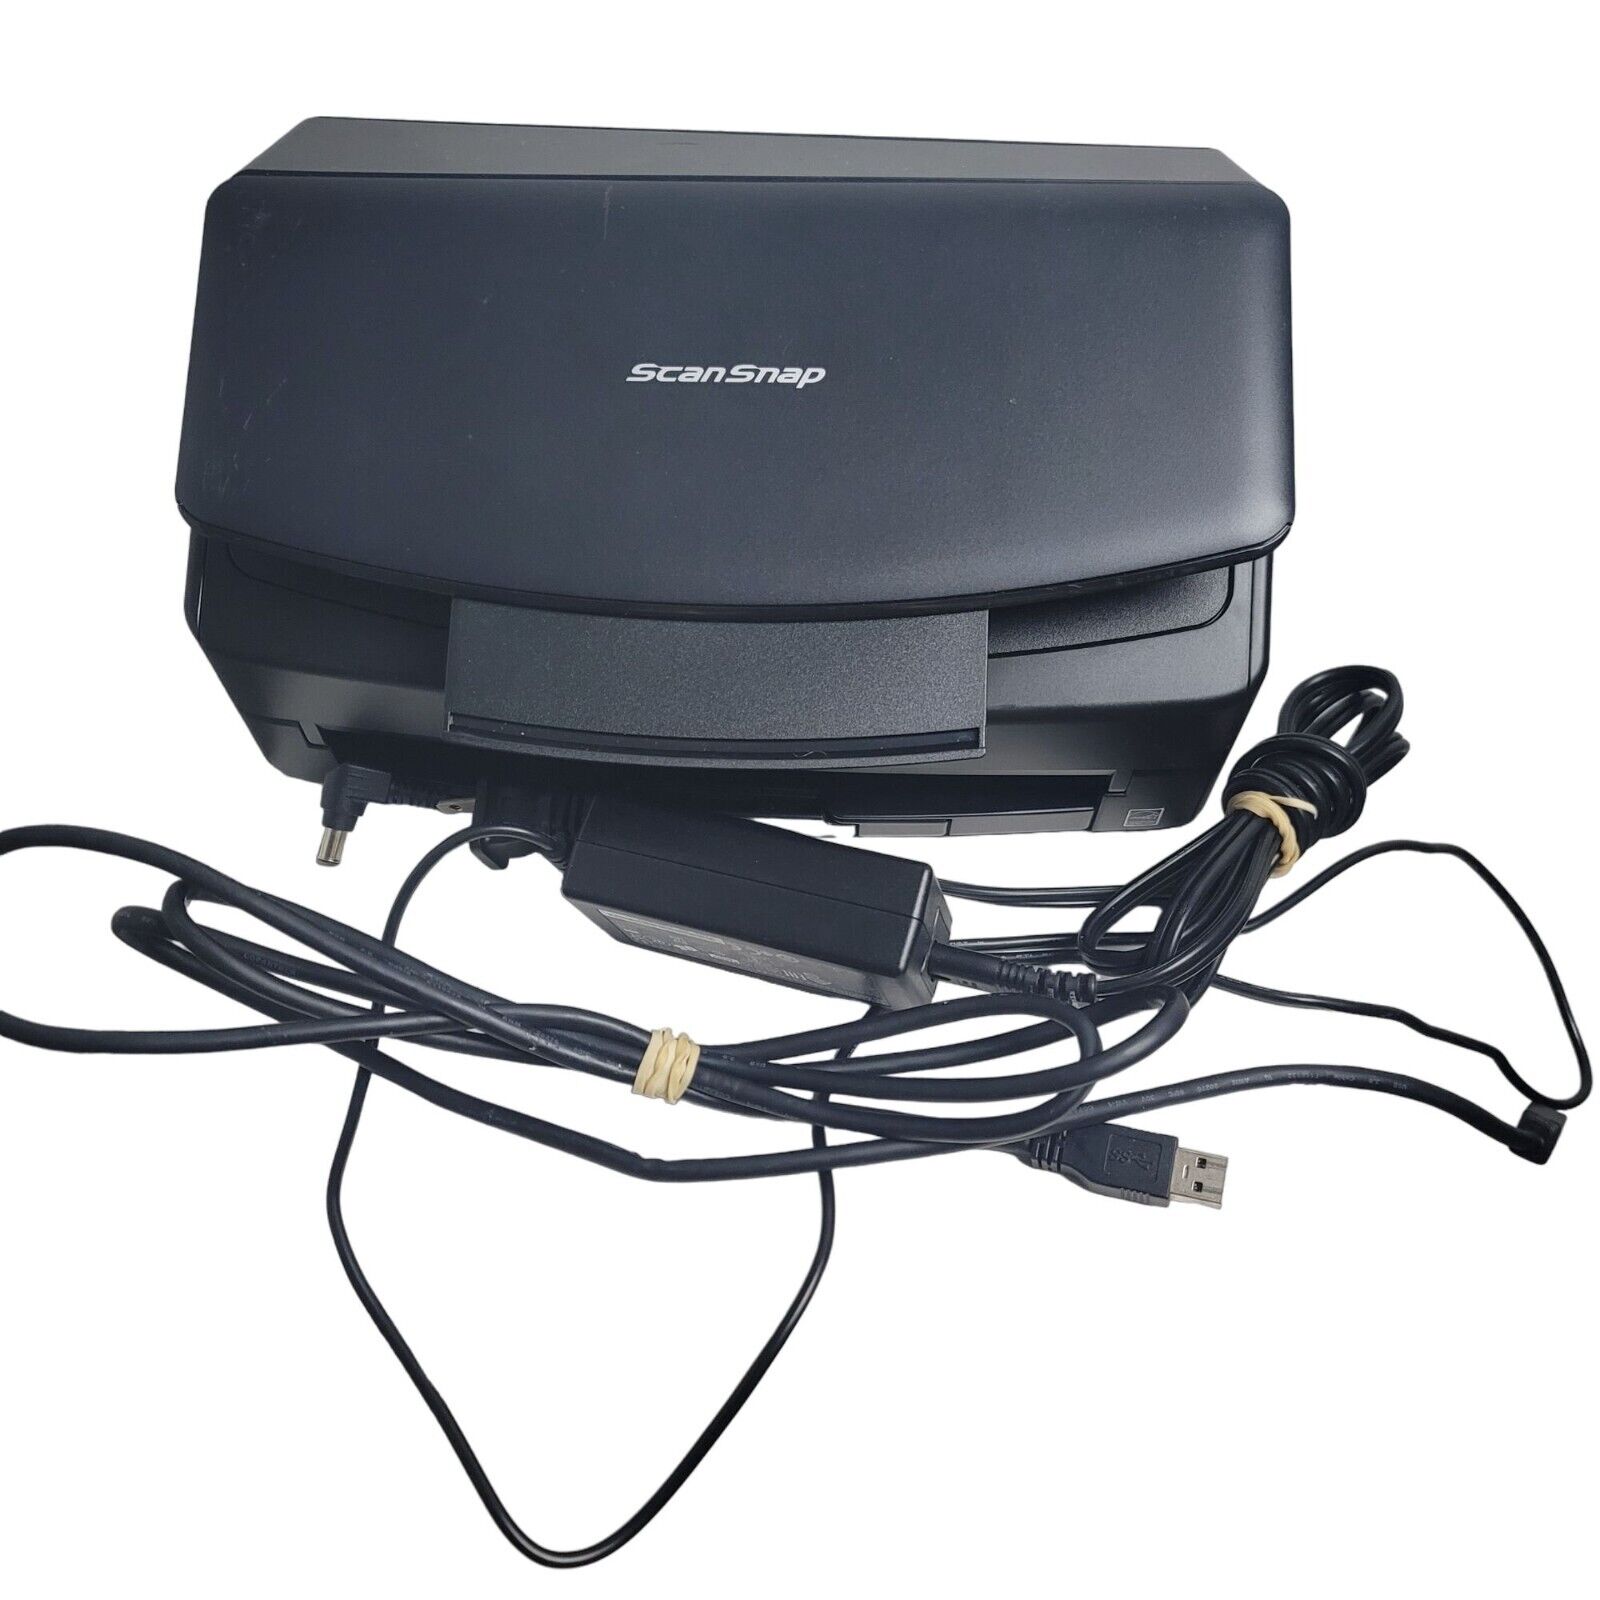 Fujitsu Scansnap Ix1400 Adf Scanner - 600 Dpi Optical - Taa Compliant - 40 Ppm